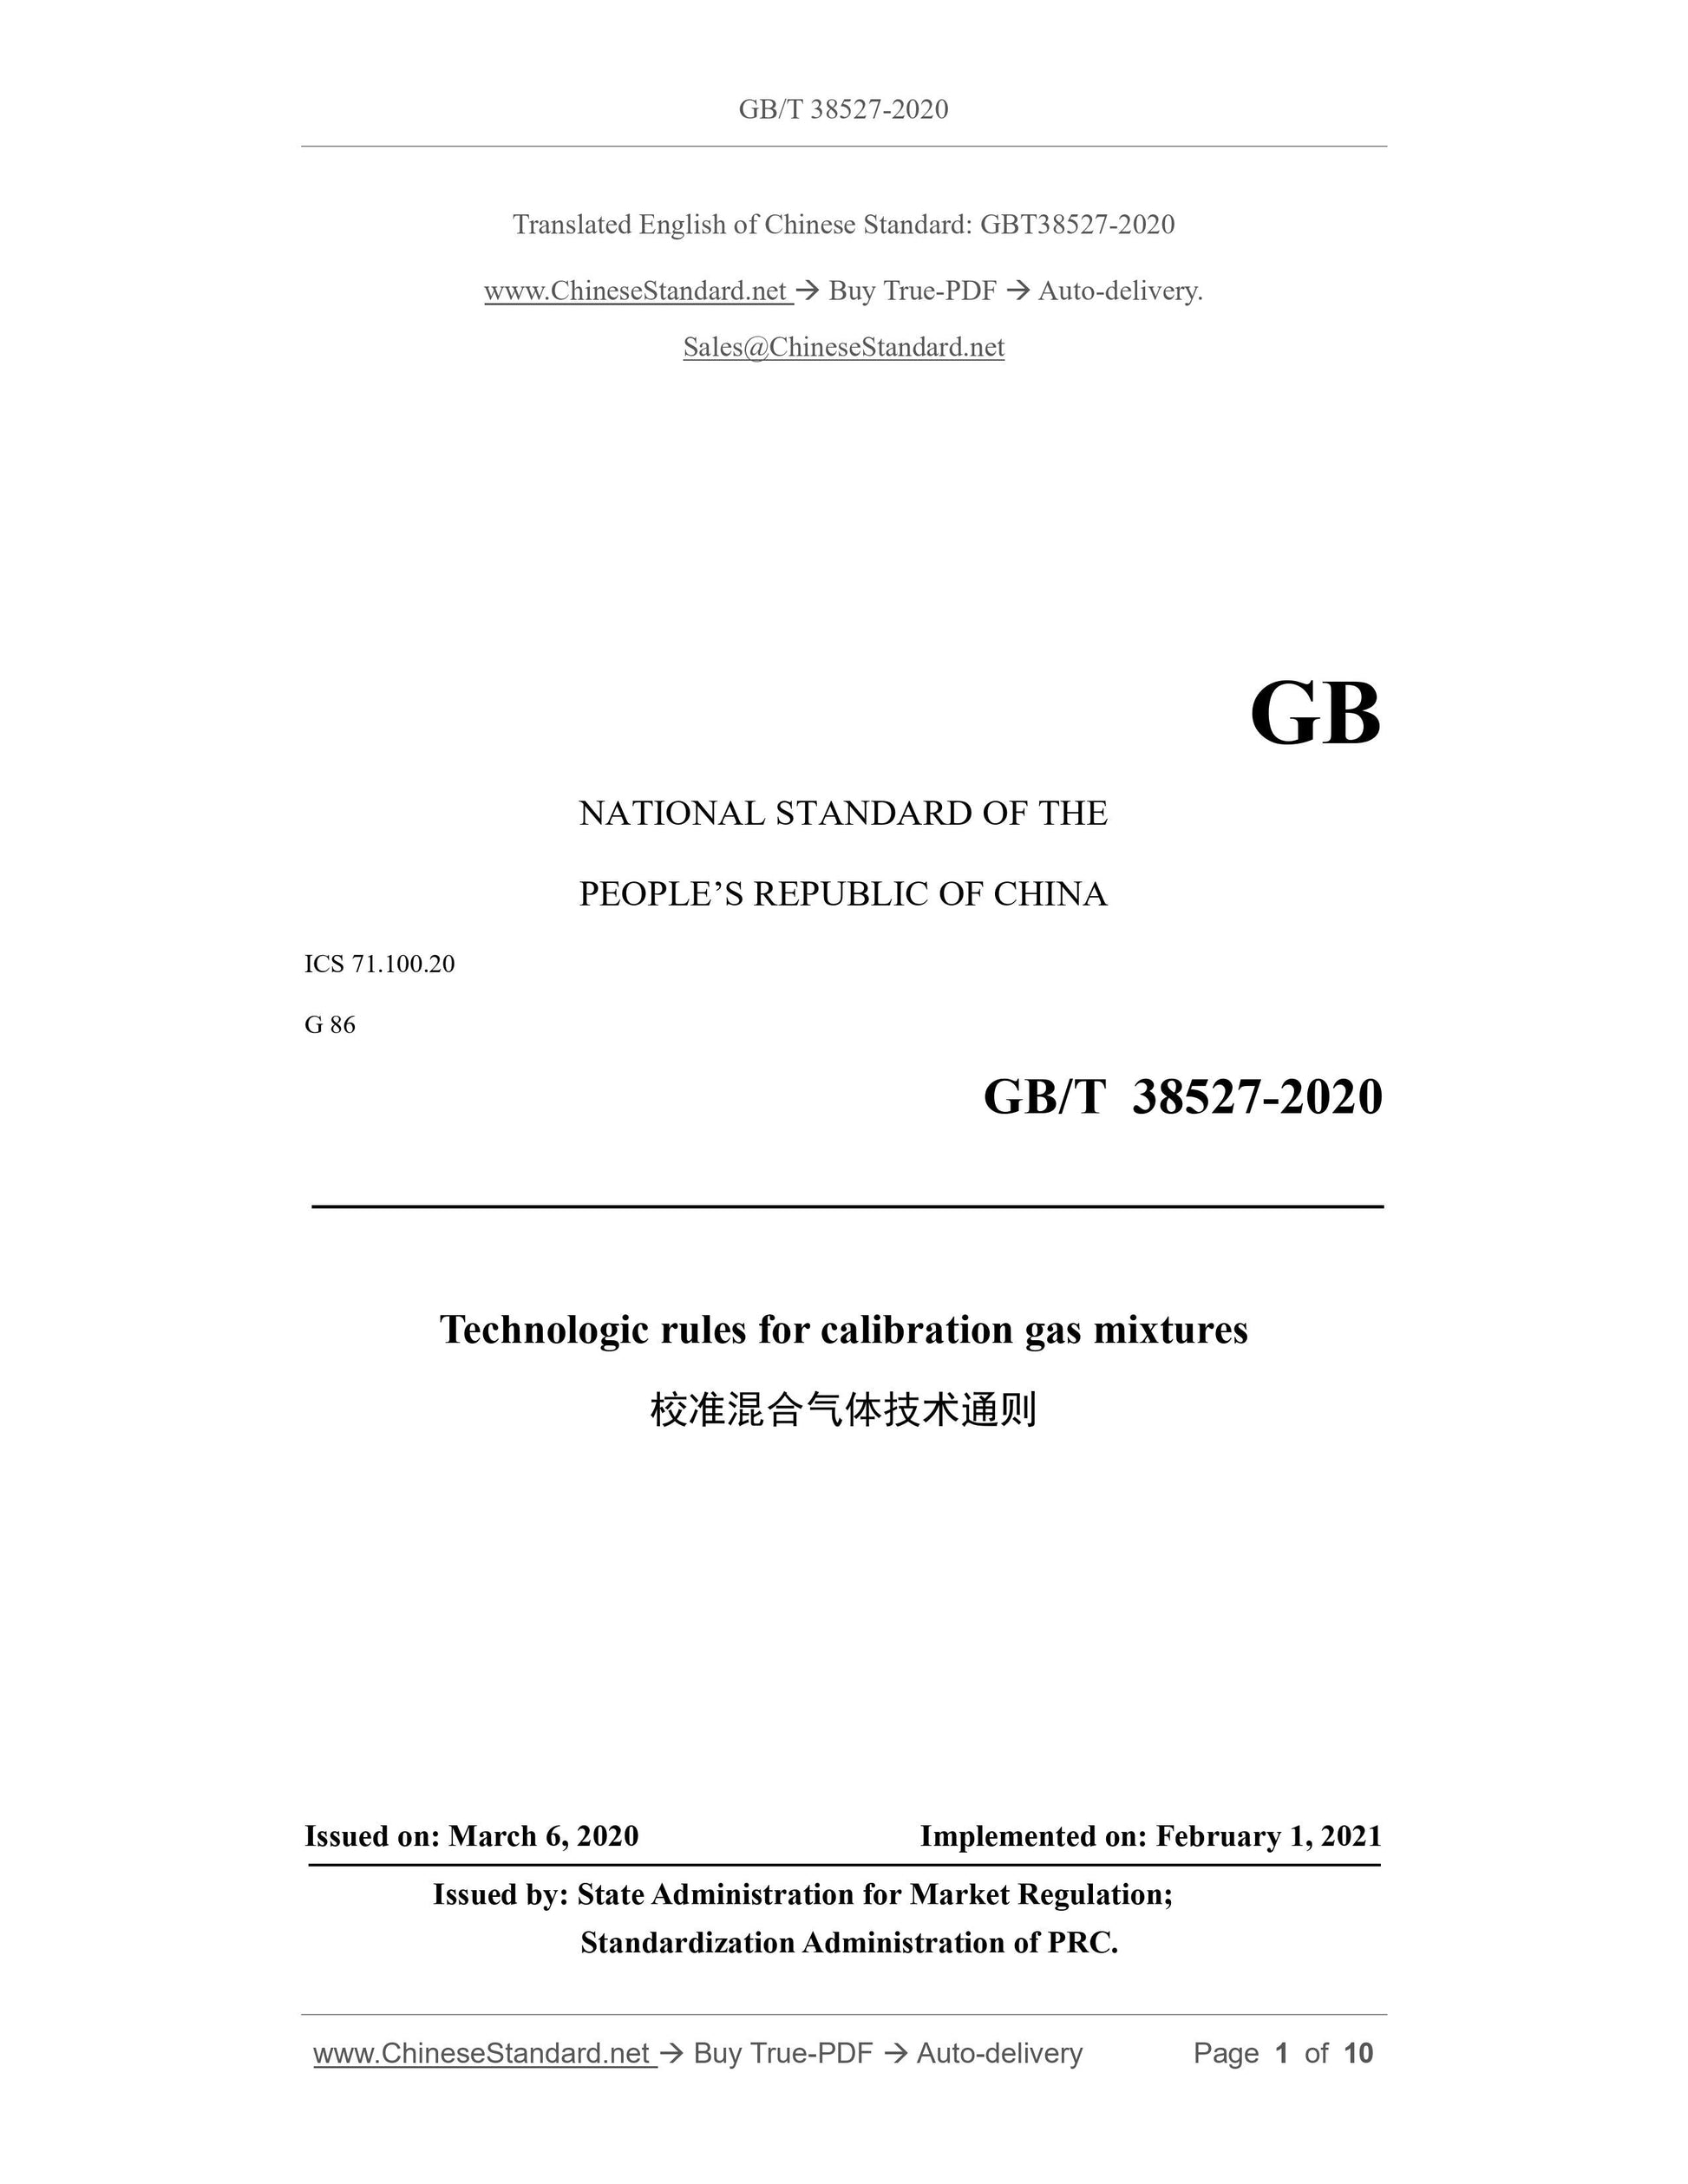 GBT38527-2020 Page 1